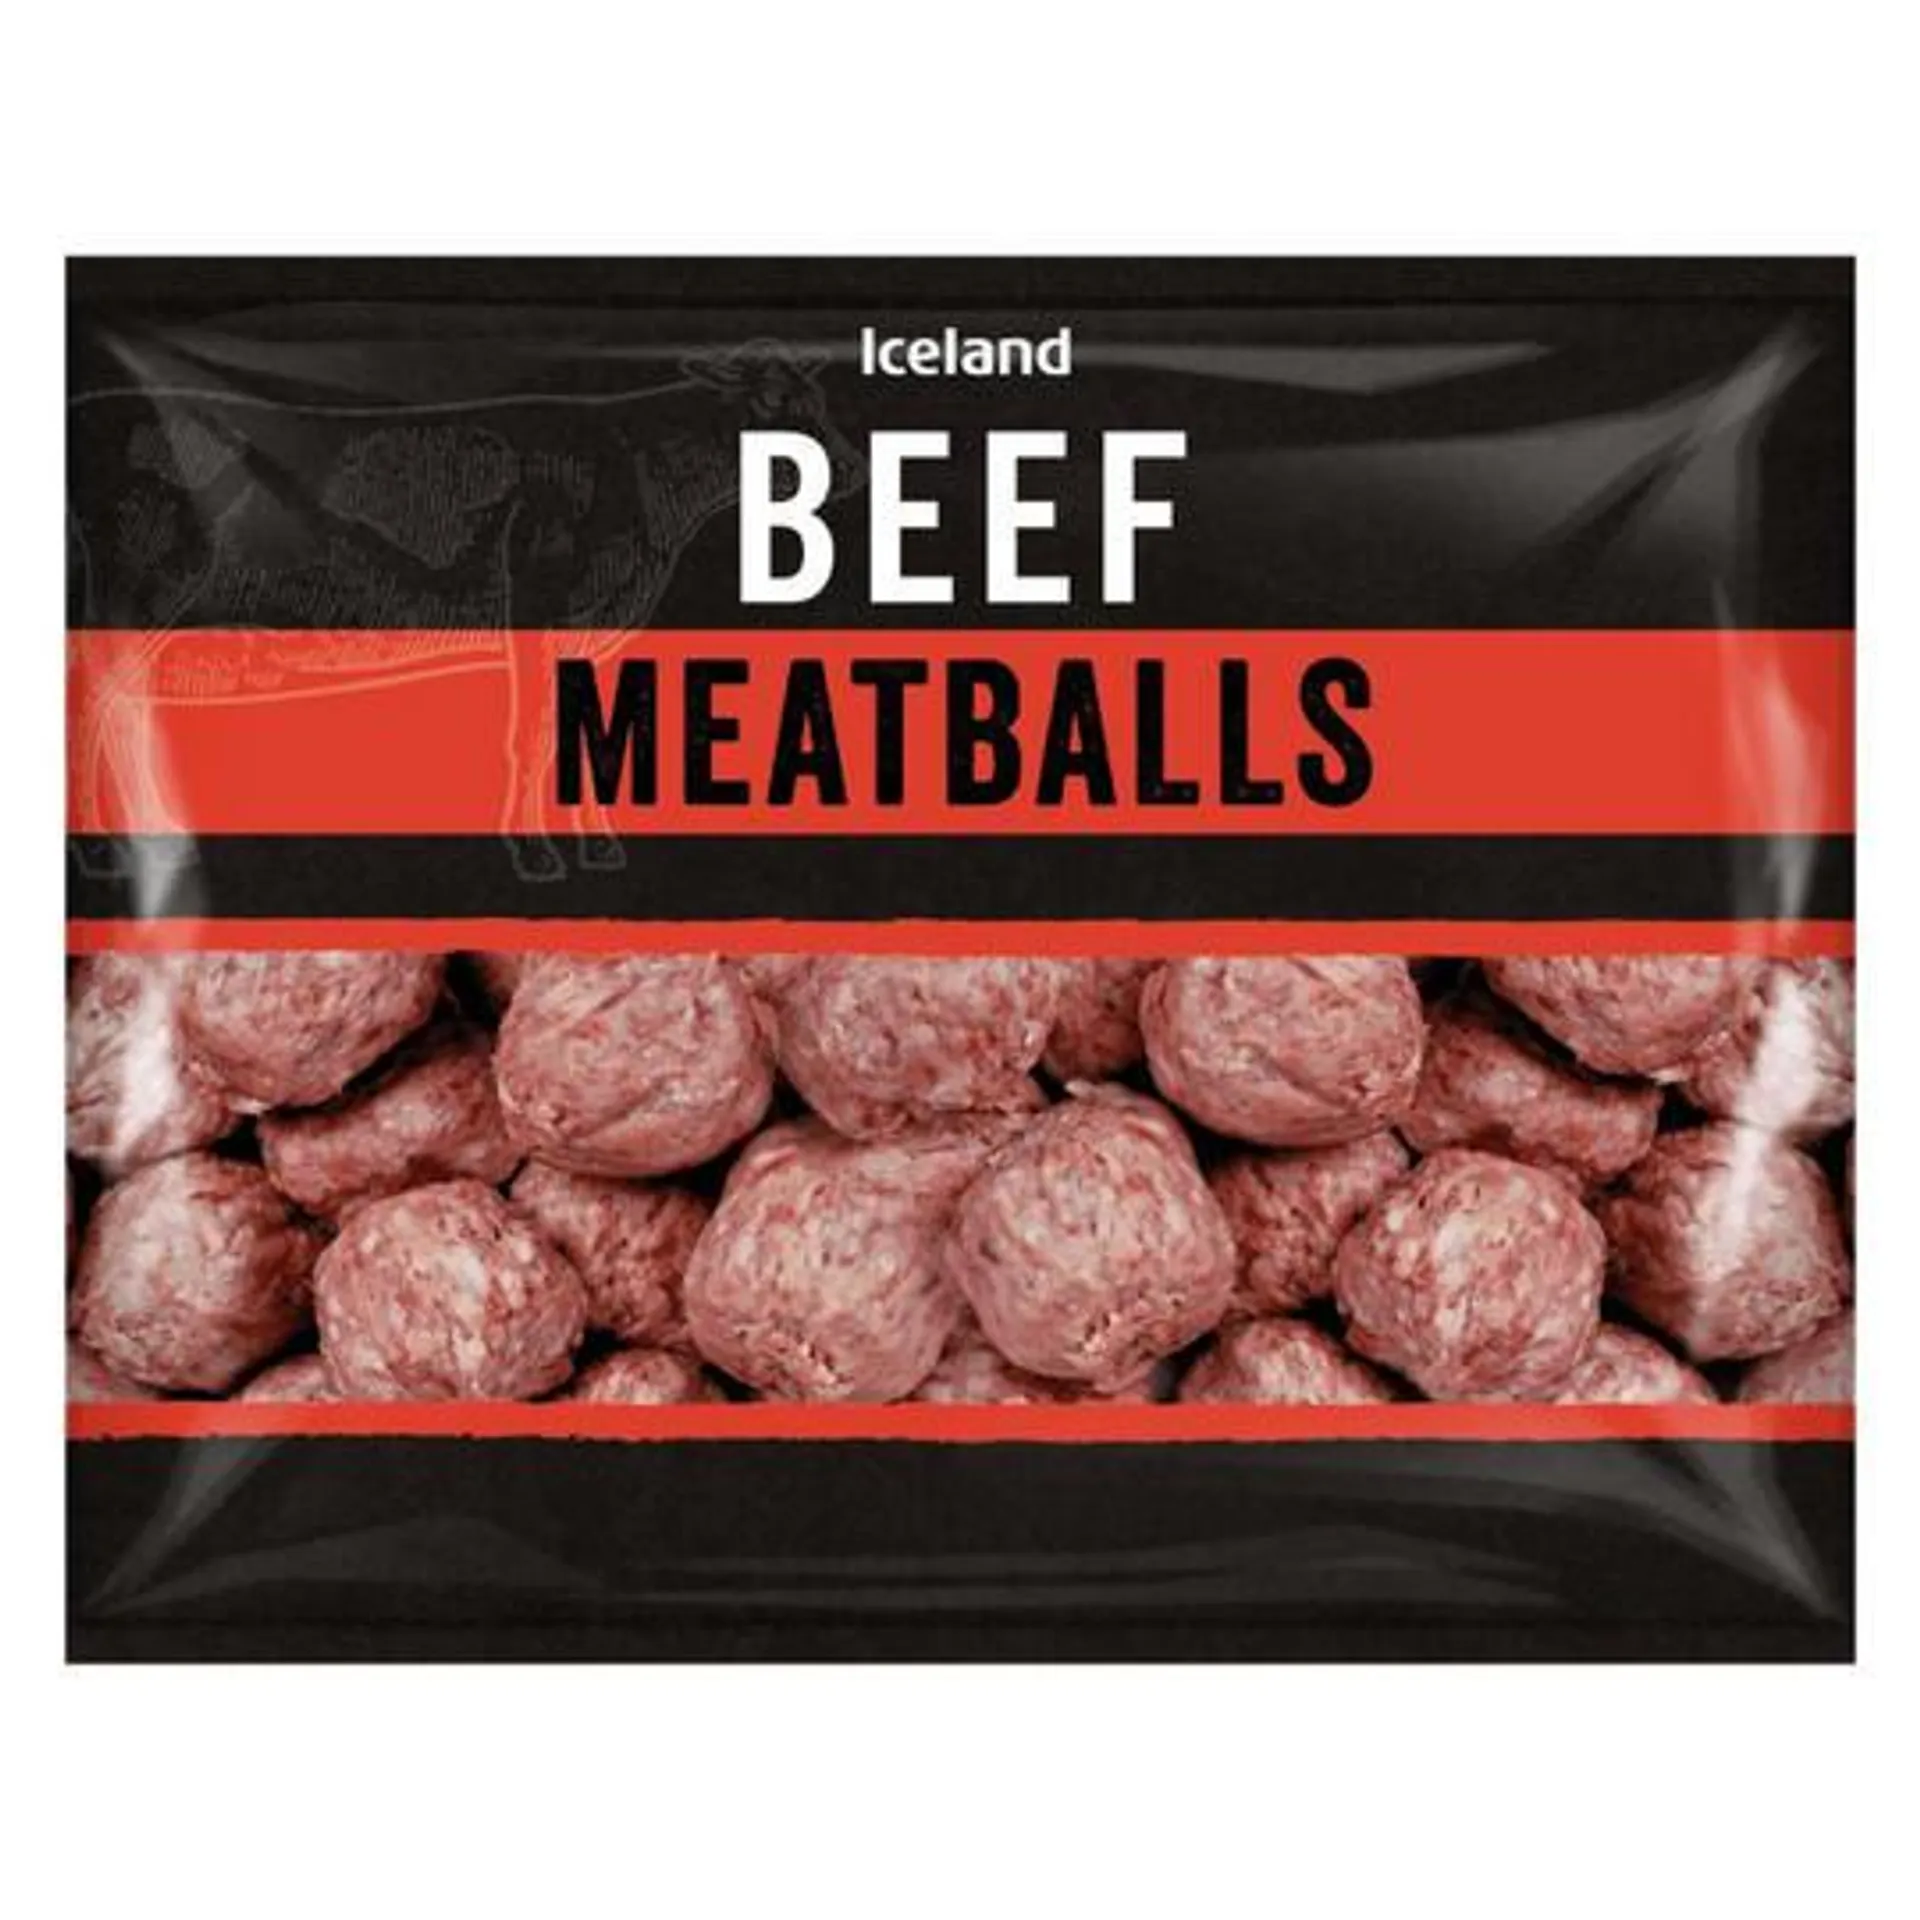 Iceland Beef Meatballs 600g